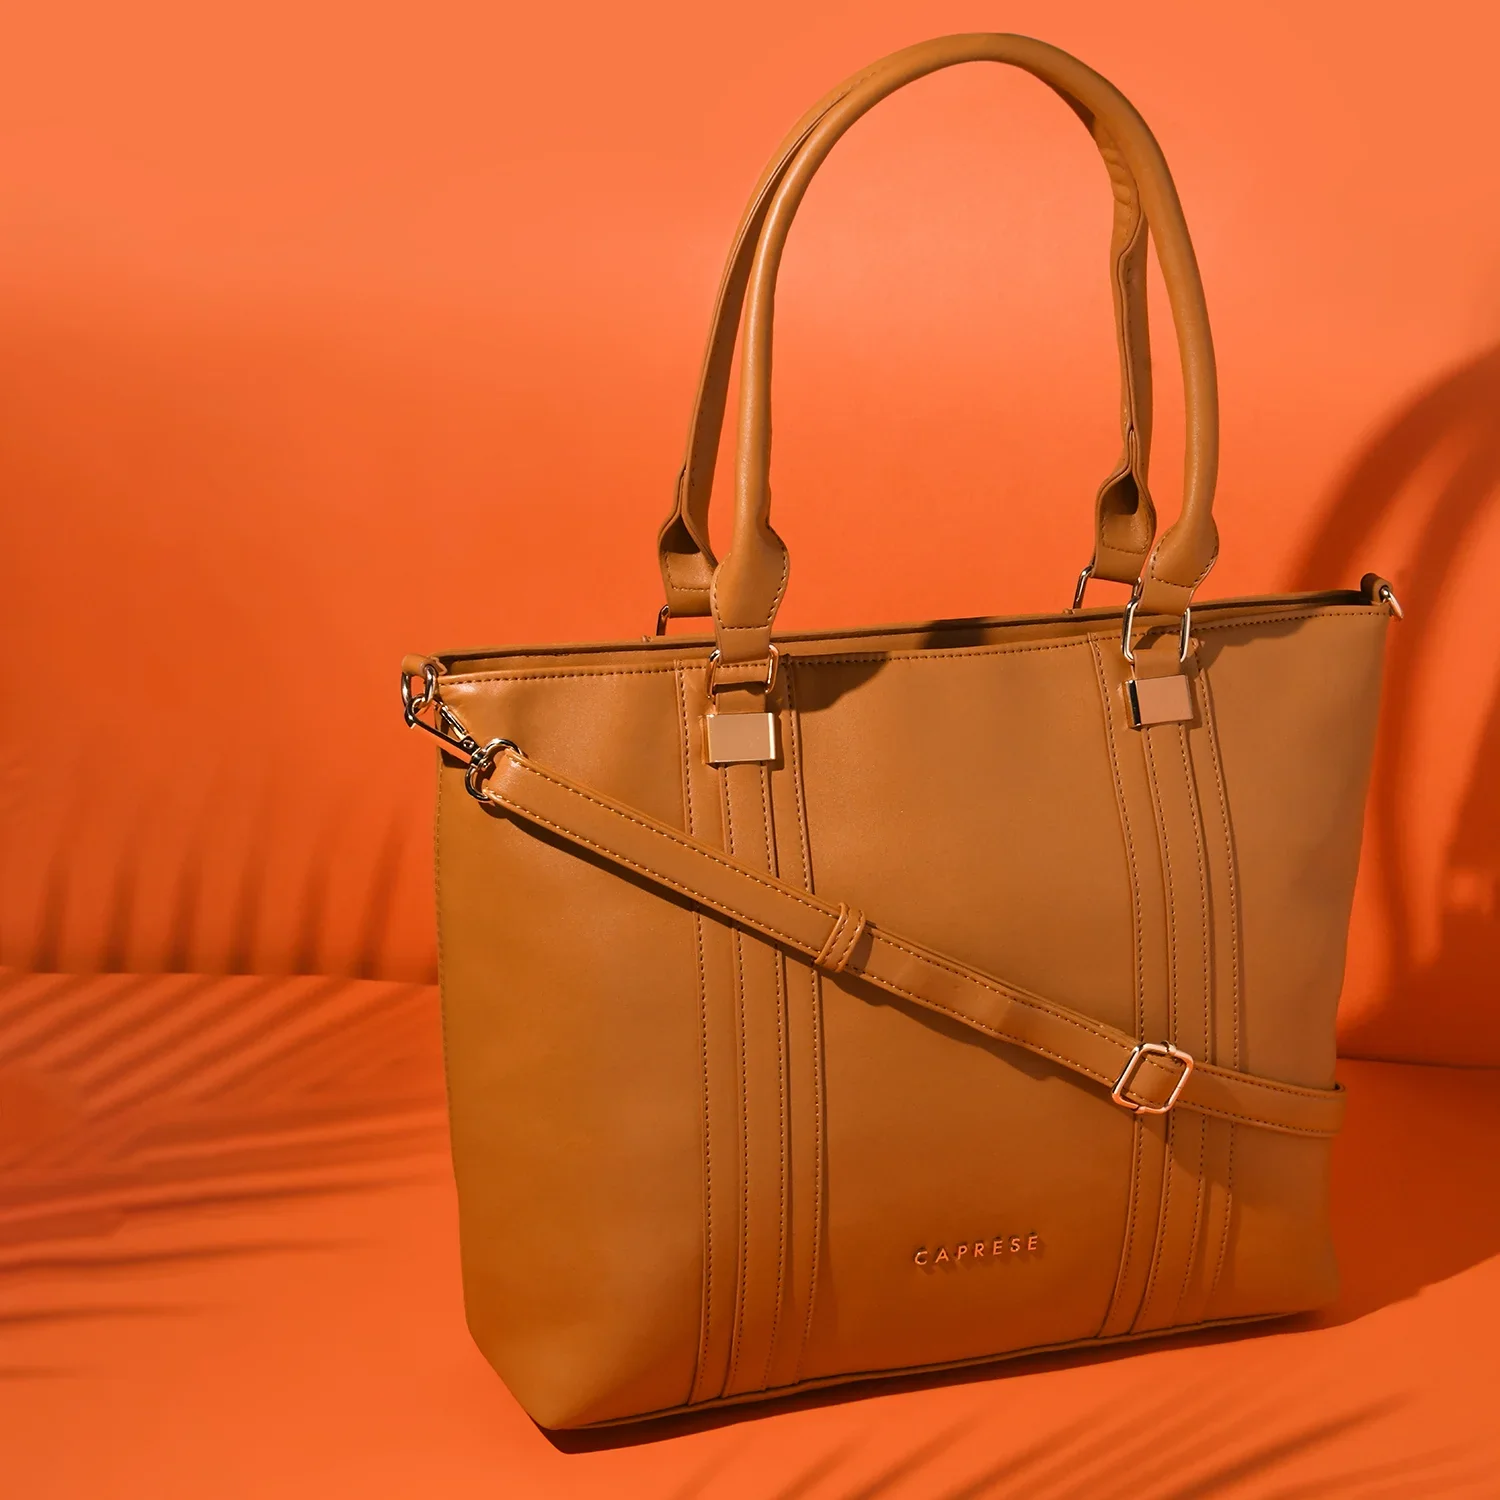 A Guide To Choosing A Perfect Handbag Online